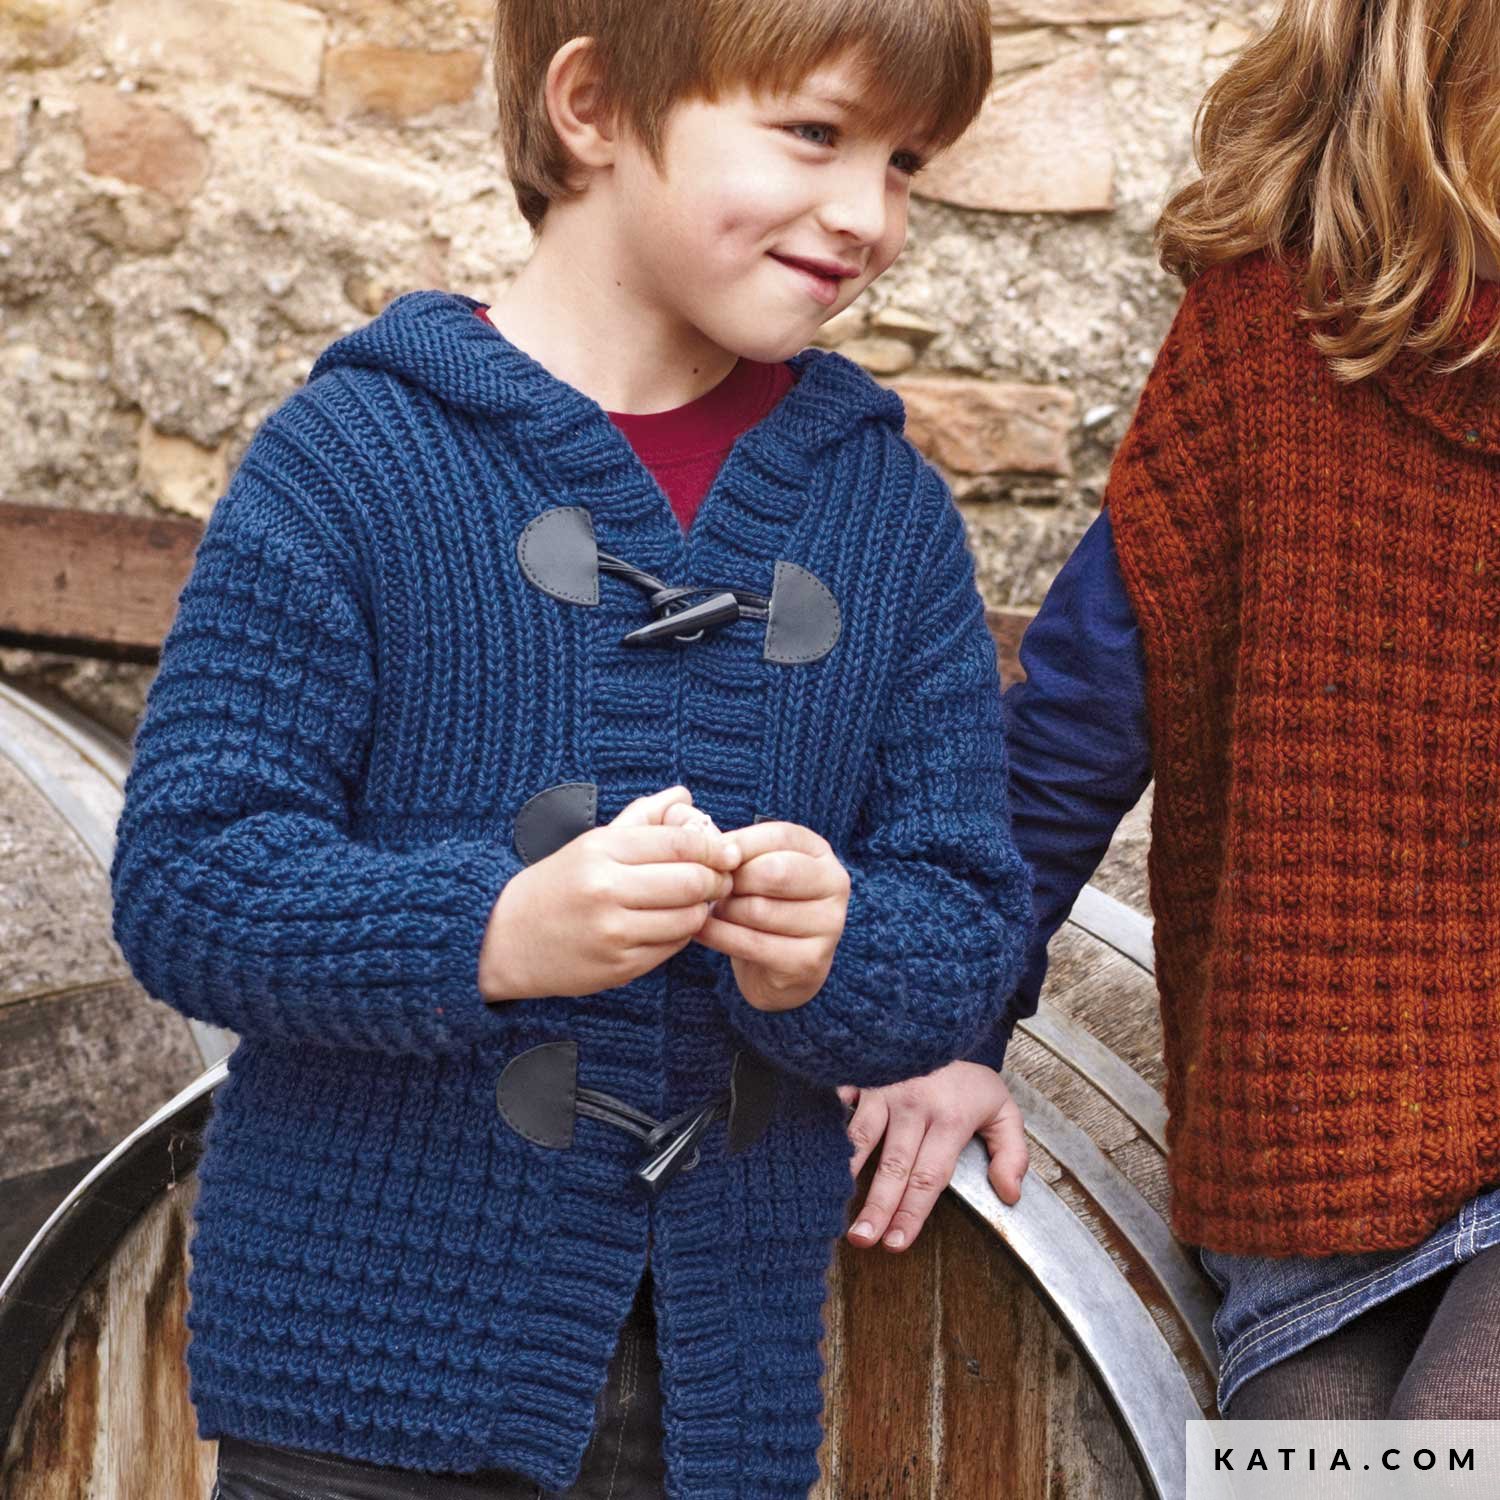 Acrylic yarn in "Soft Blue" Fall to Spring long sleeve Handknit Gift Idea Cardigan for Infant Boy Kleding Jongenskleding Babykleding voor jongens Truien Age 9 to 12 mo. Children's Jacket 